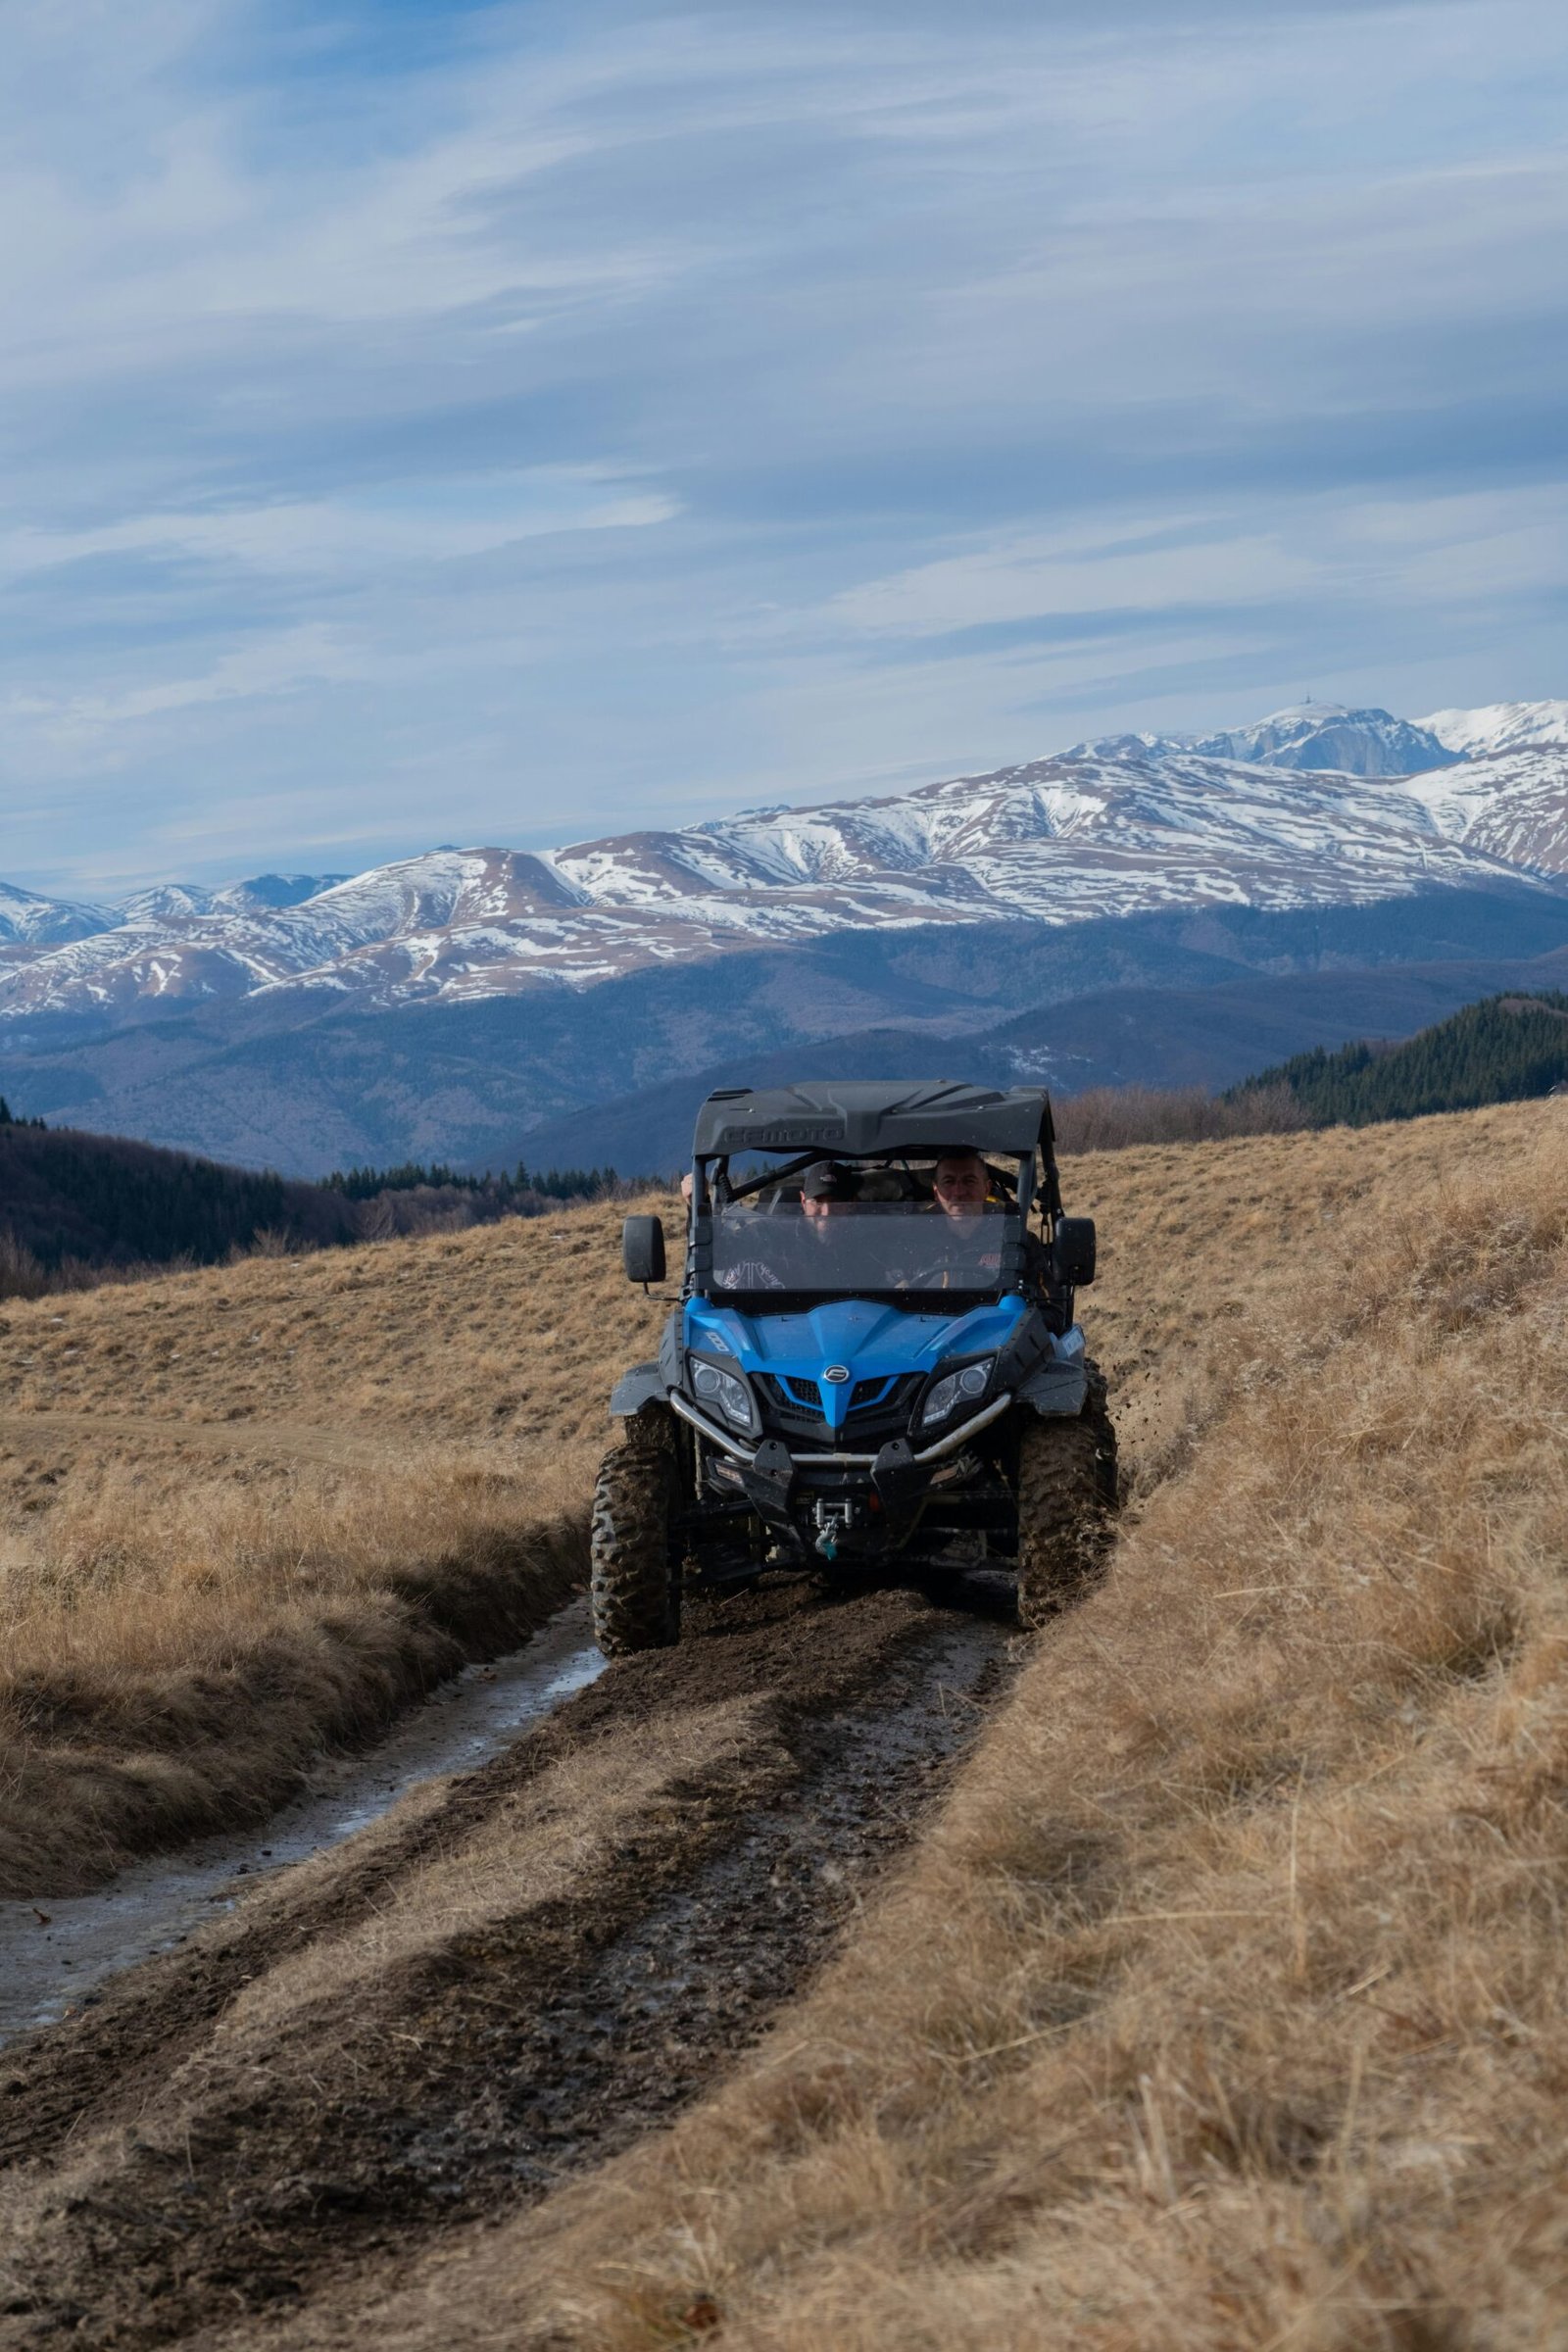 a blue four - wheeler utvs driving down a dirt road